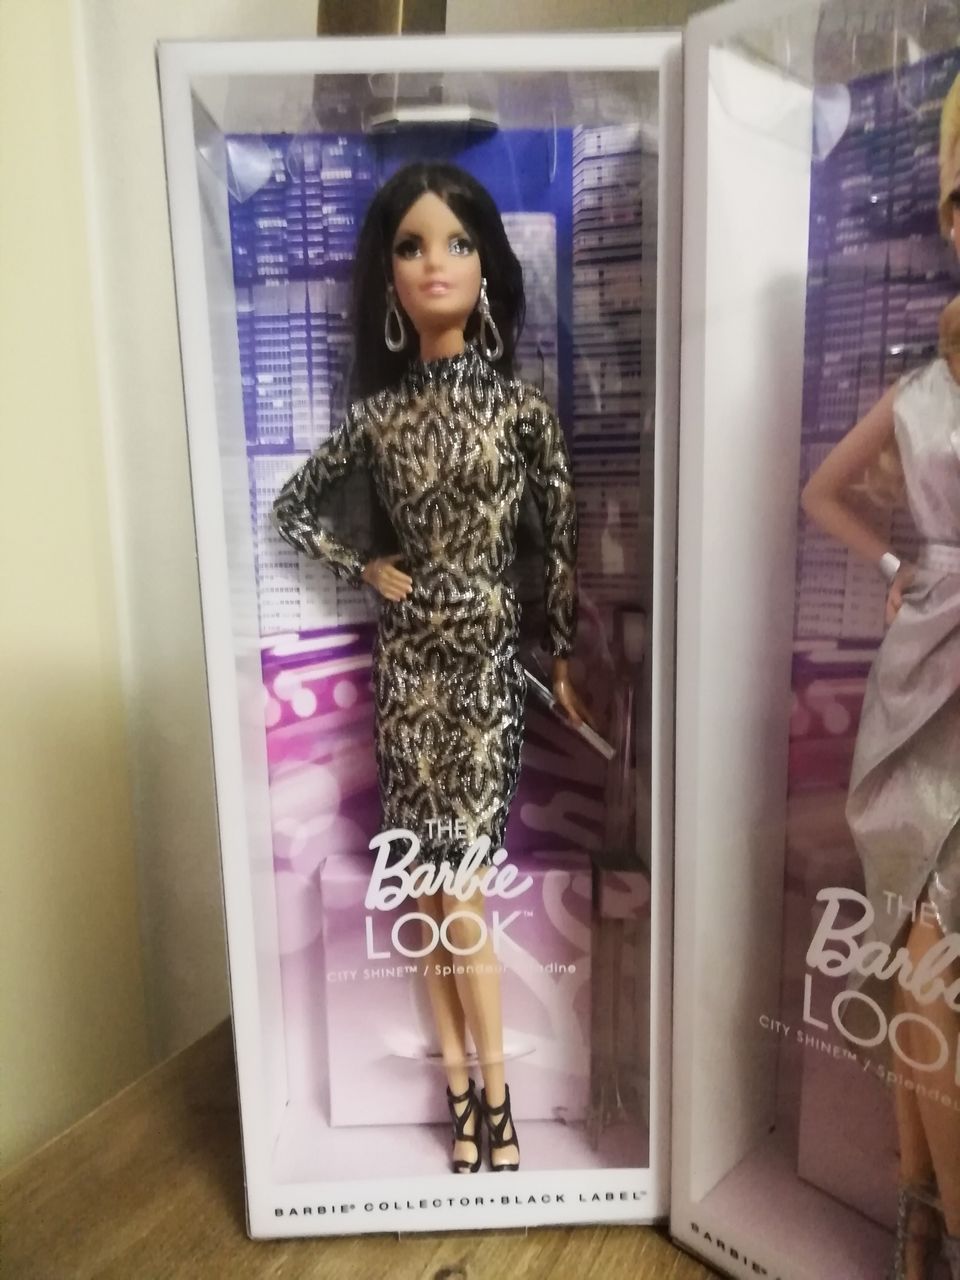 Uusi Barbie Look city shine black and gold /2014